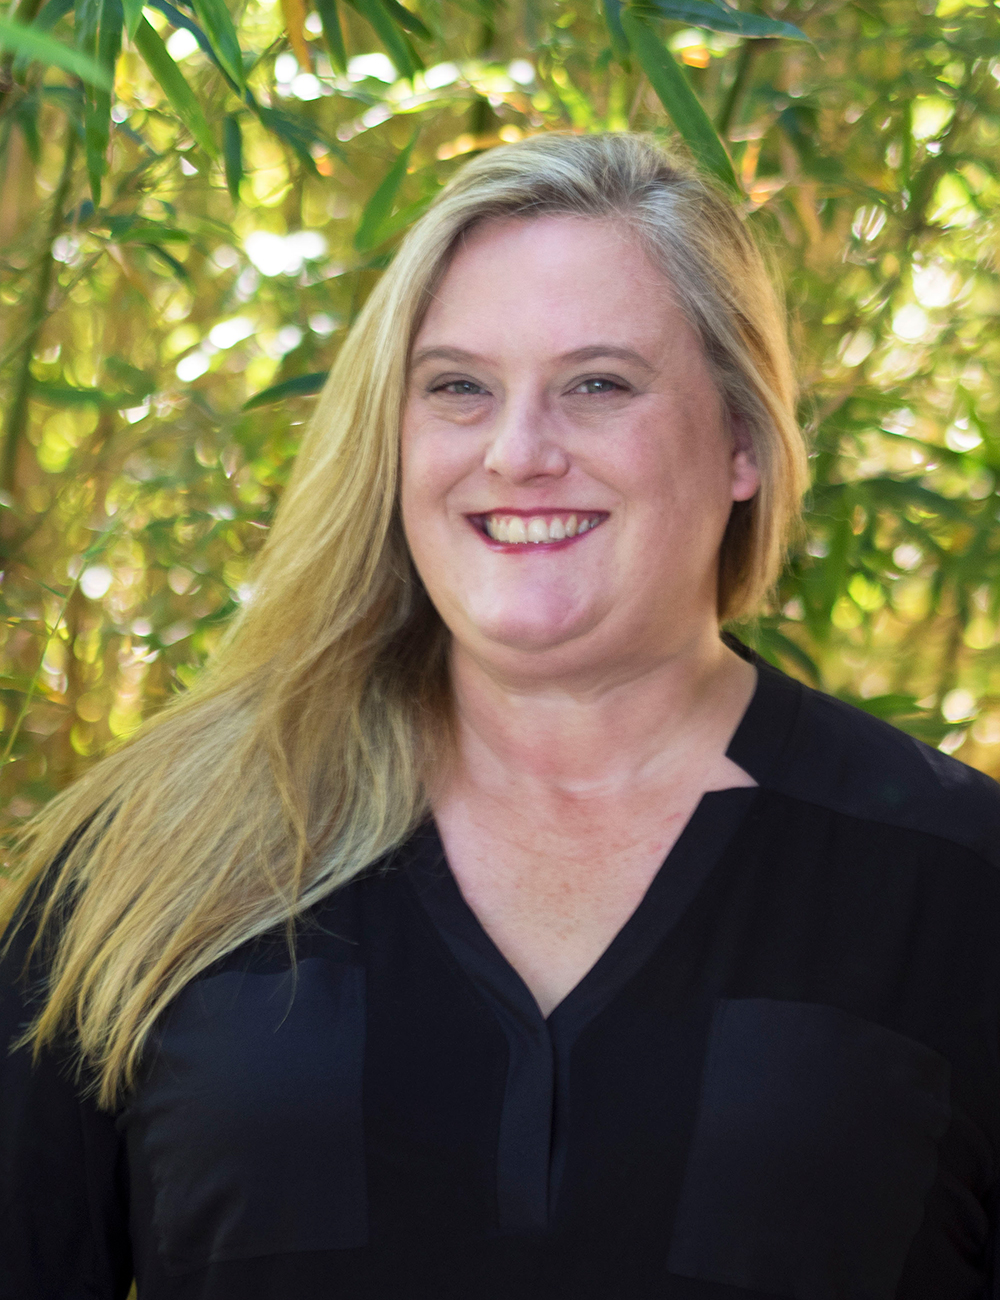 Sara McCleary, CEO of AIMS profile photo.